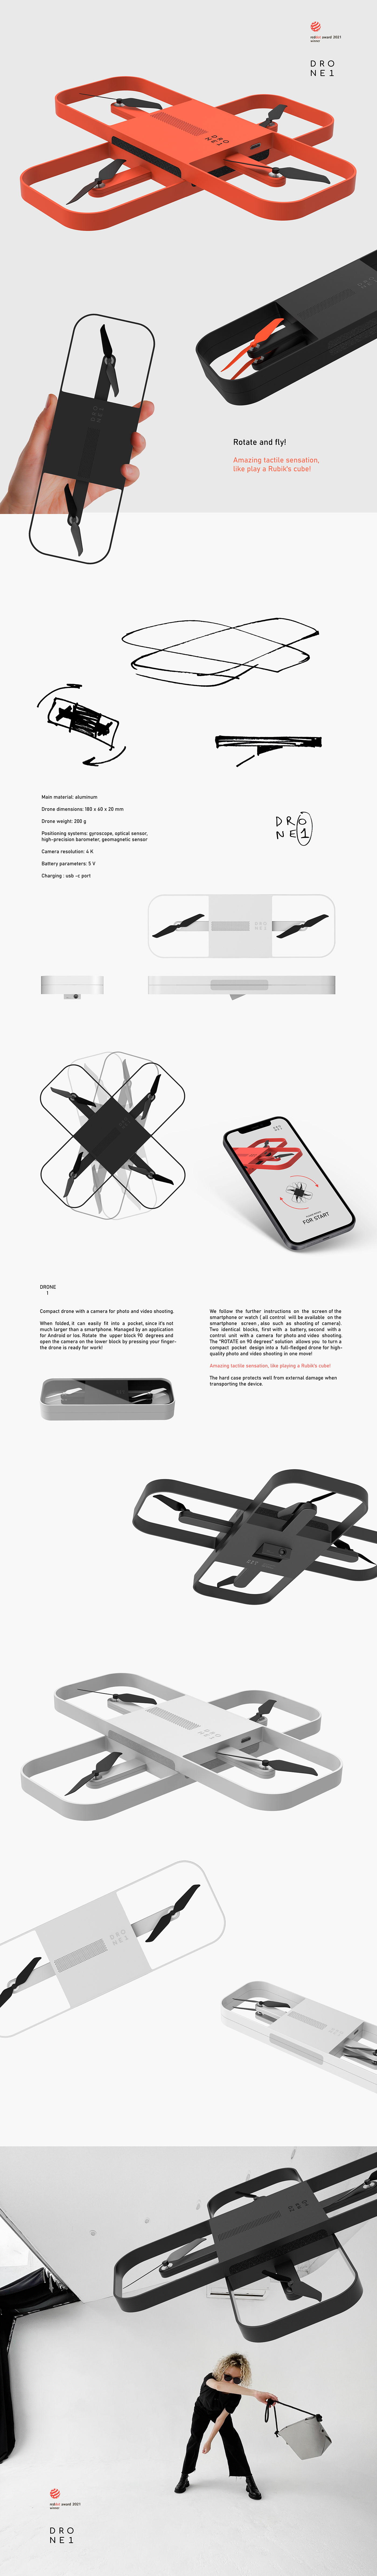 concept drone Gadget industrial design  mayaprodesign mobile Photography  portrait reddot reddot design award